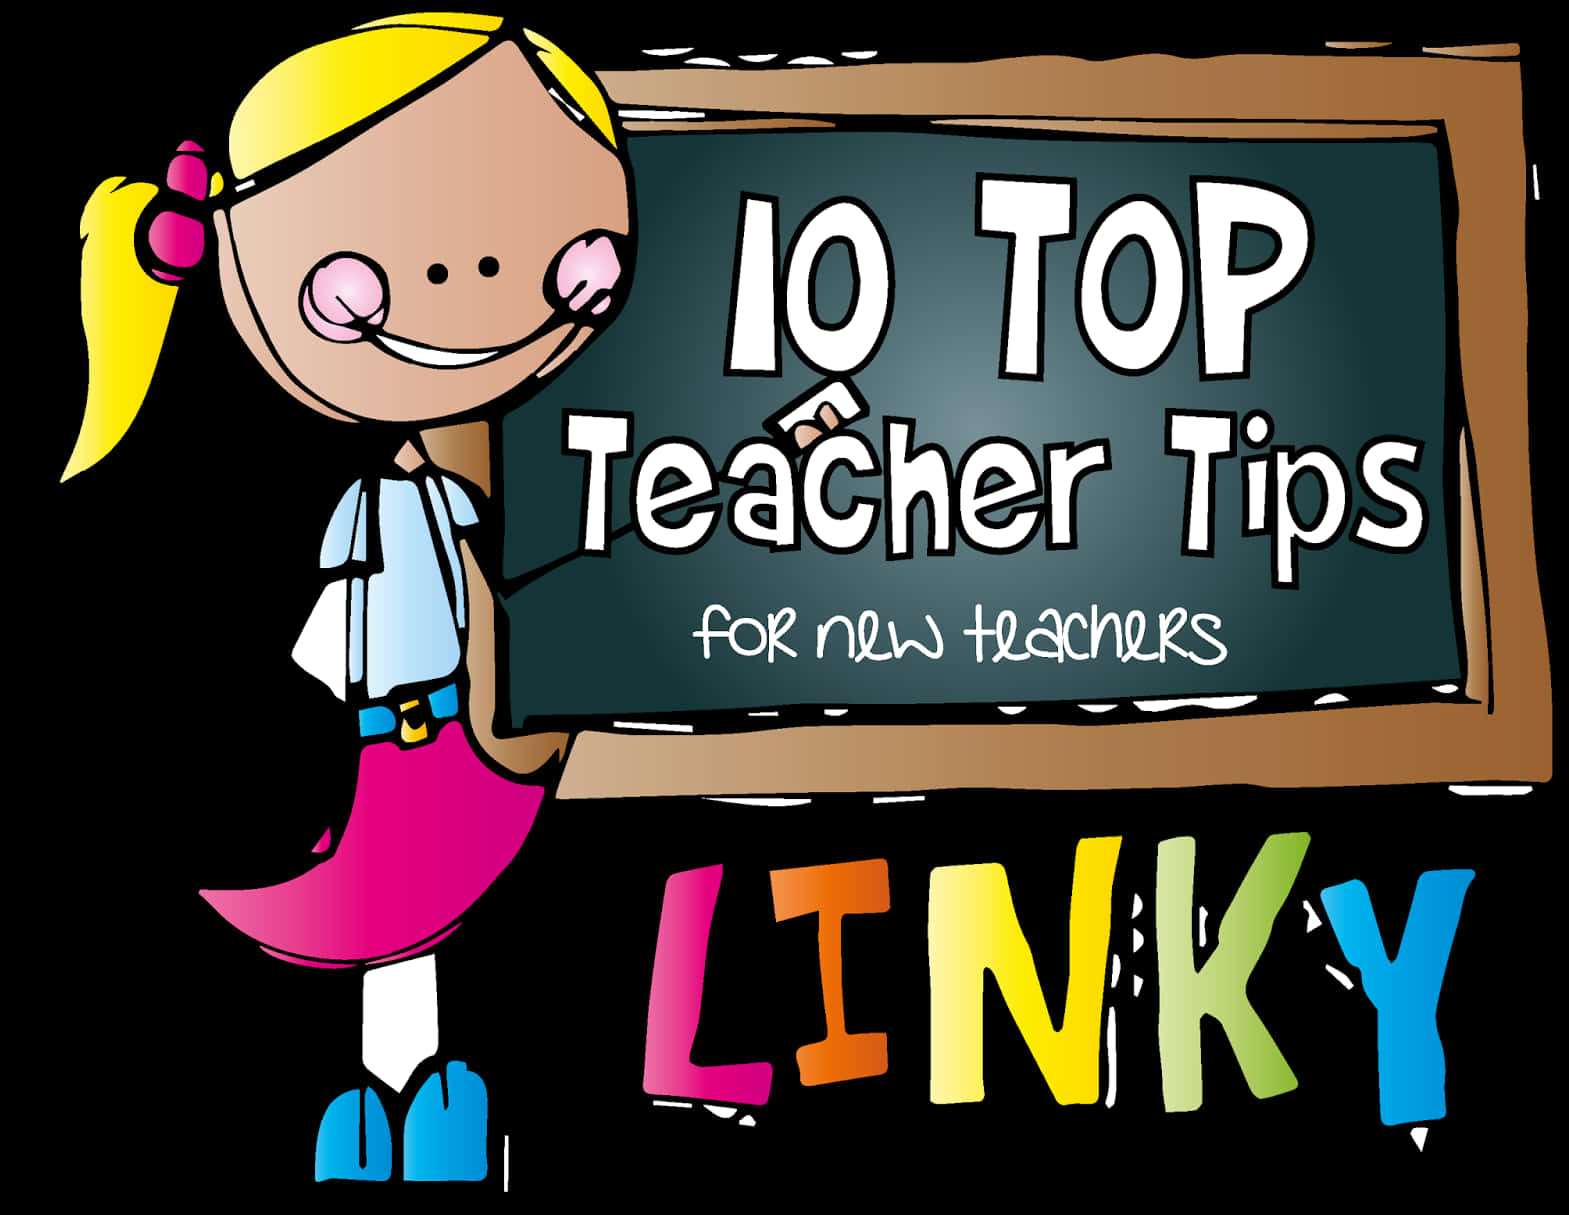 Top Teacher Tips Cartoon Clipart PNG image